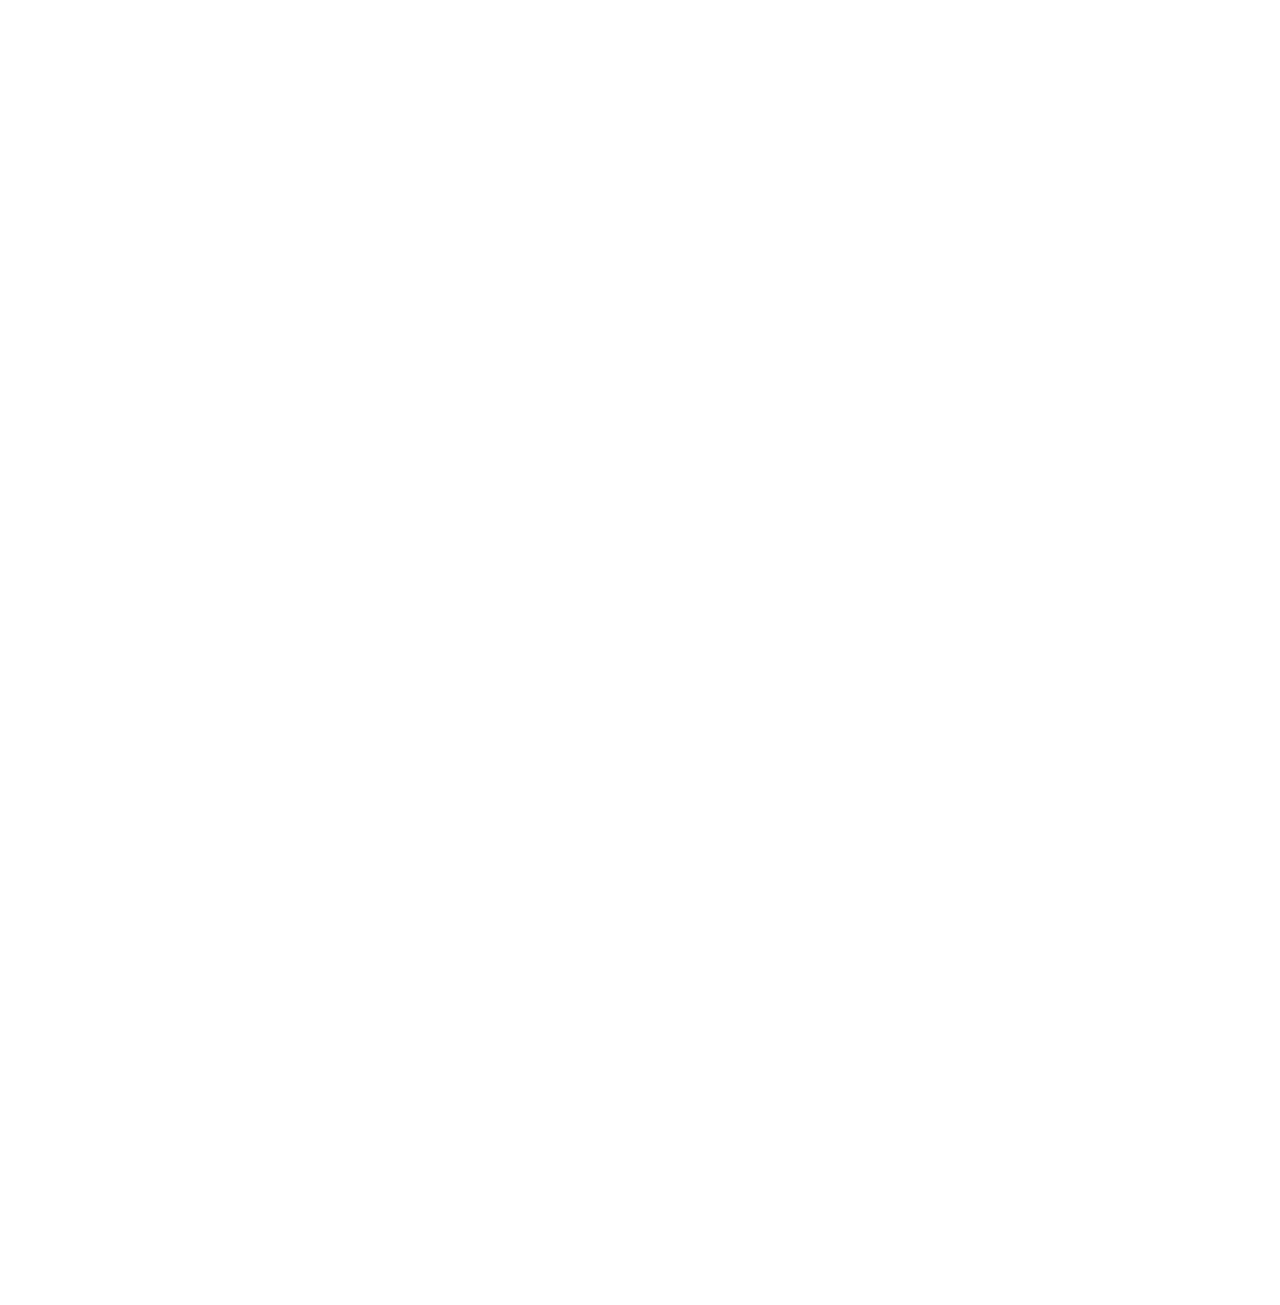 ANGELA THARP's web page